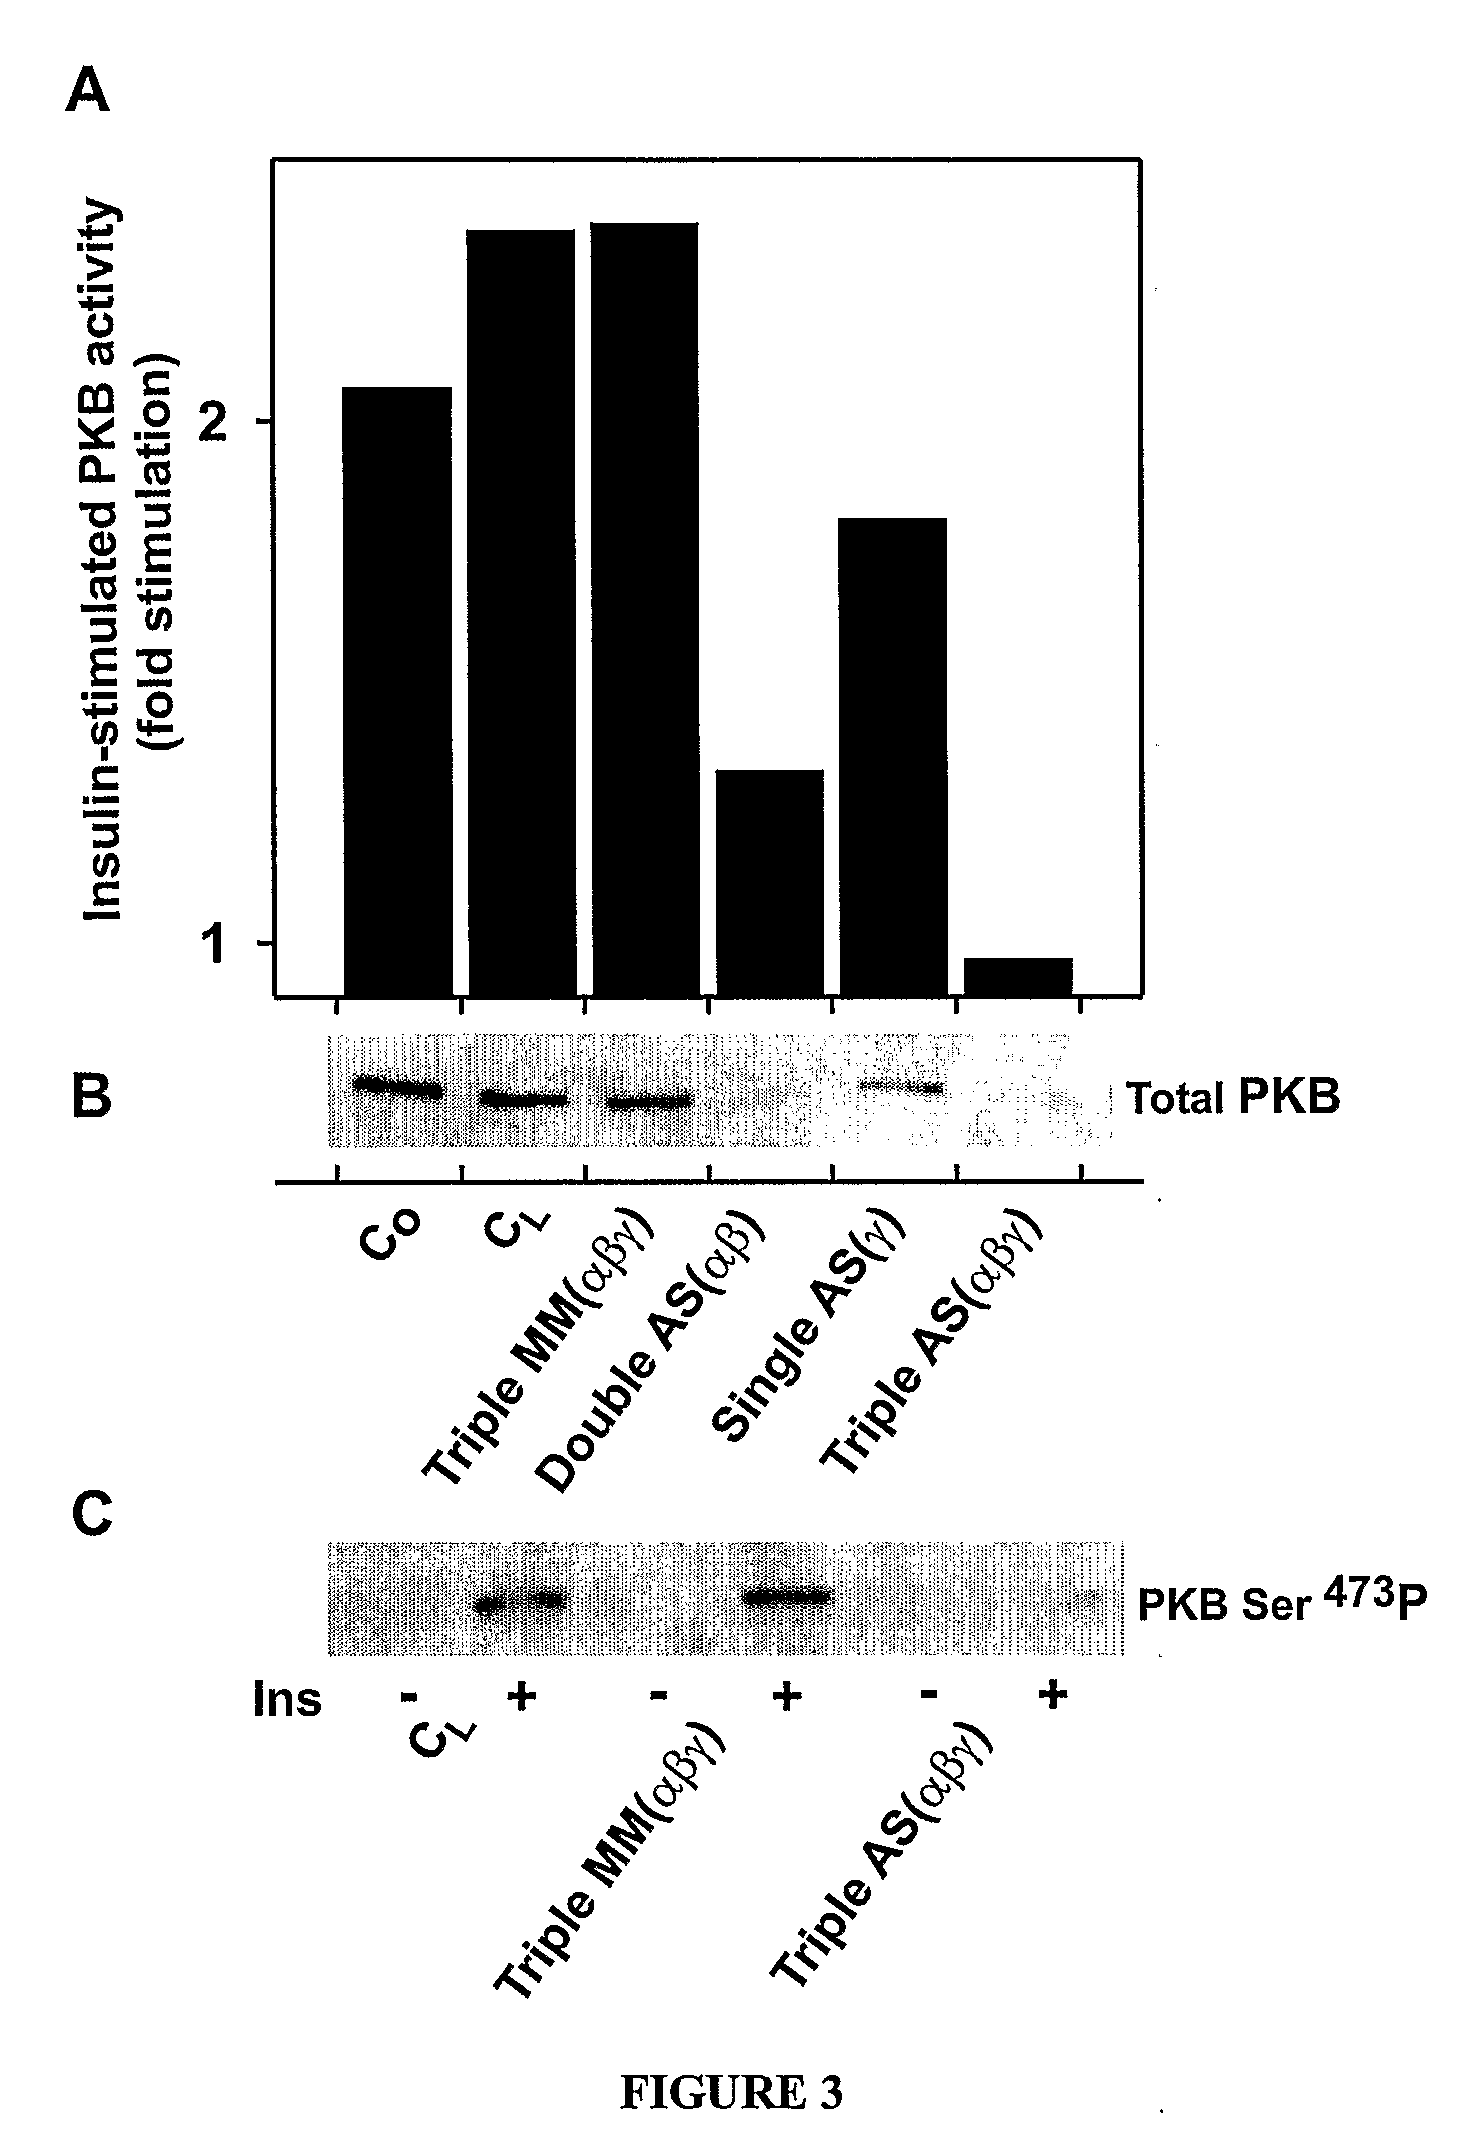 Antisense oligonucleotides against protein kinase isoforms alpha, beta and gamma